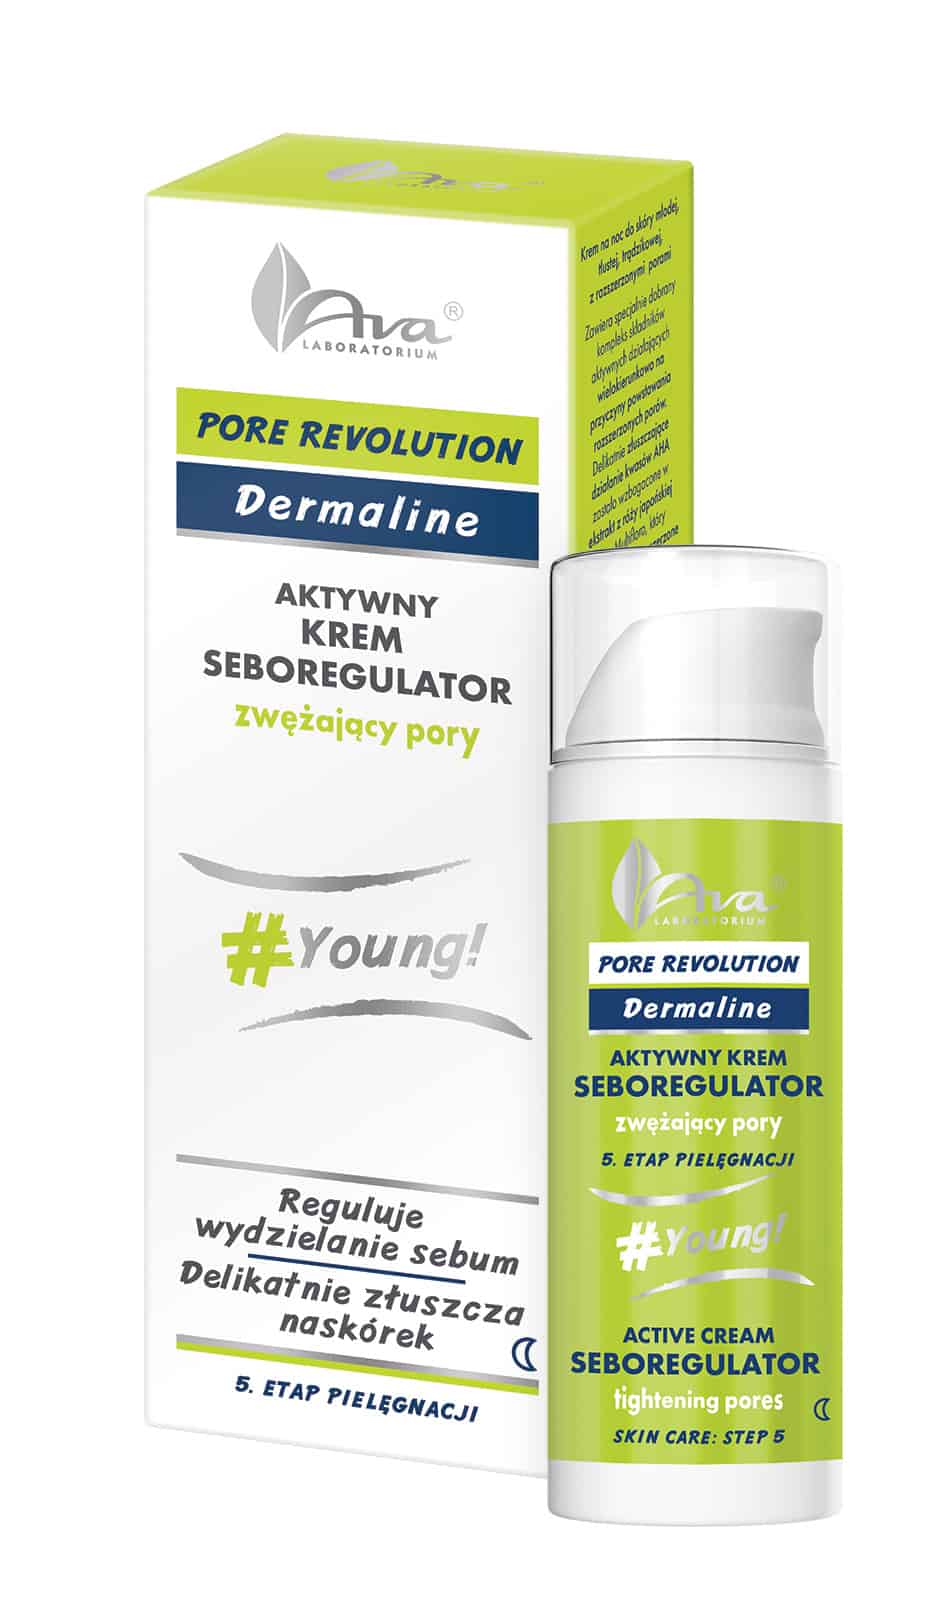 PORE REVOLUTION Active cream seboregulator tightening pores